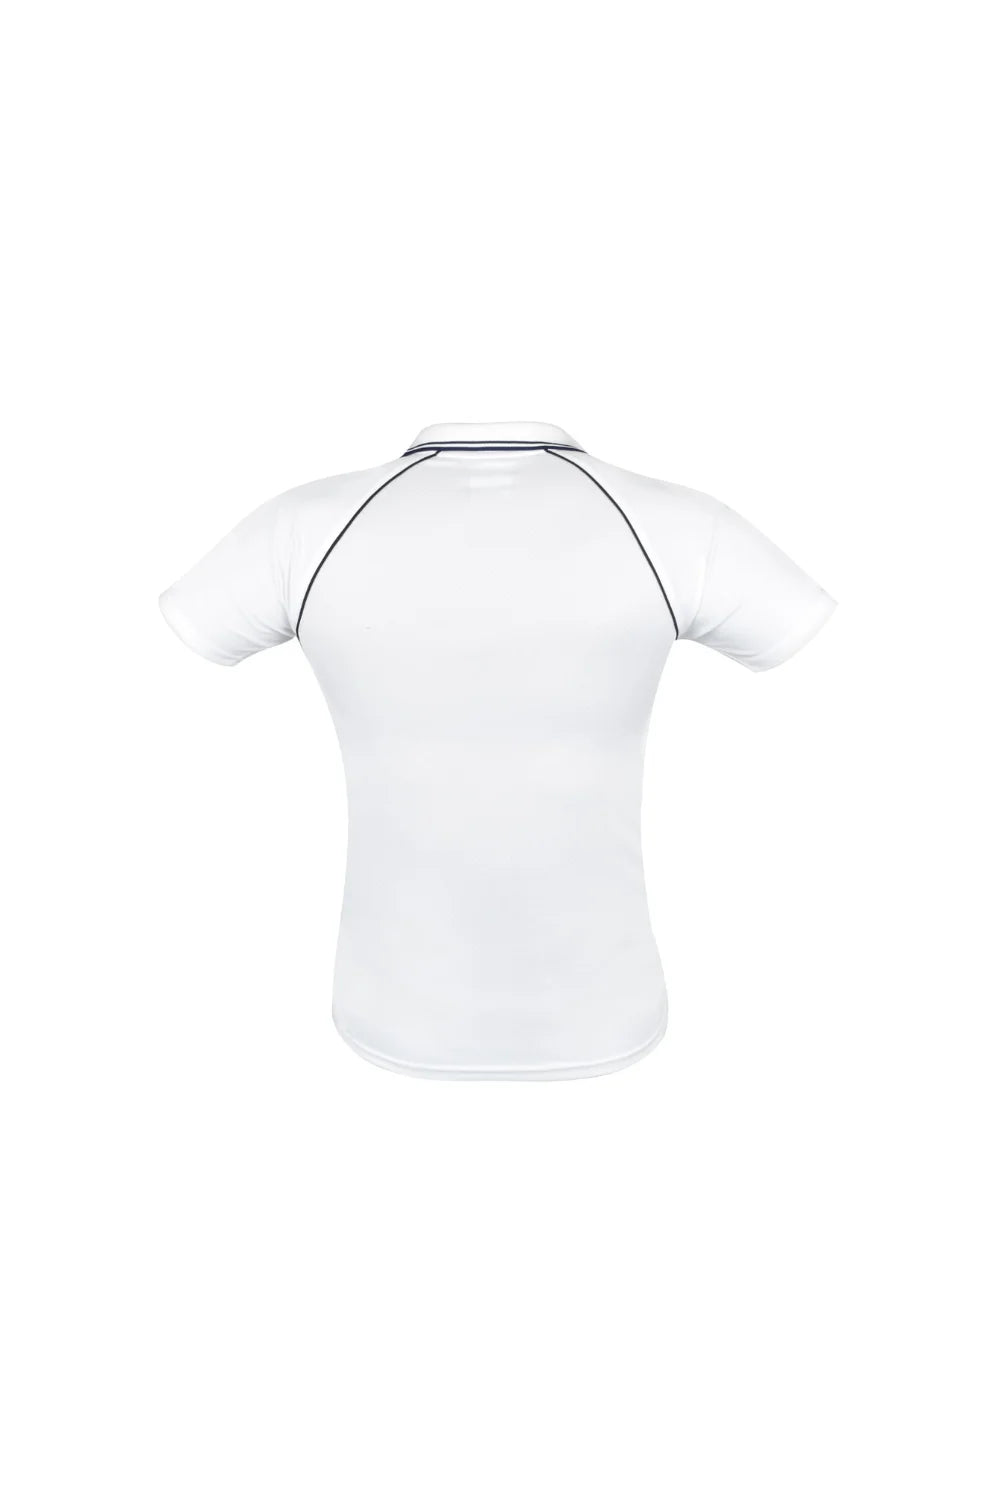 Cricket White t-shirt